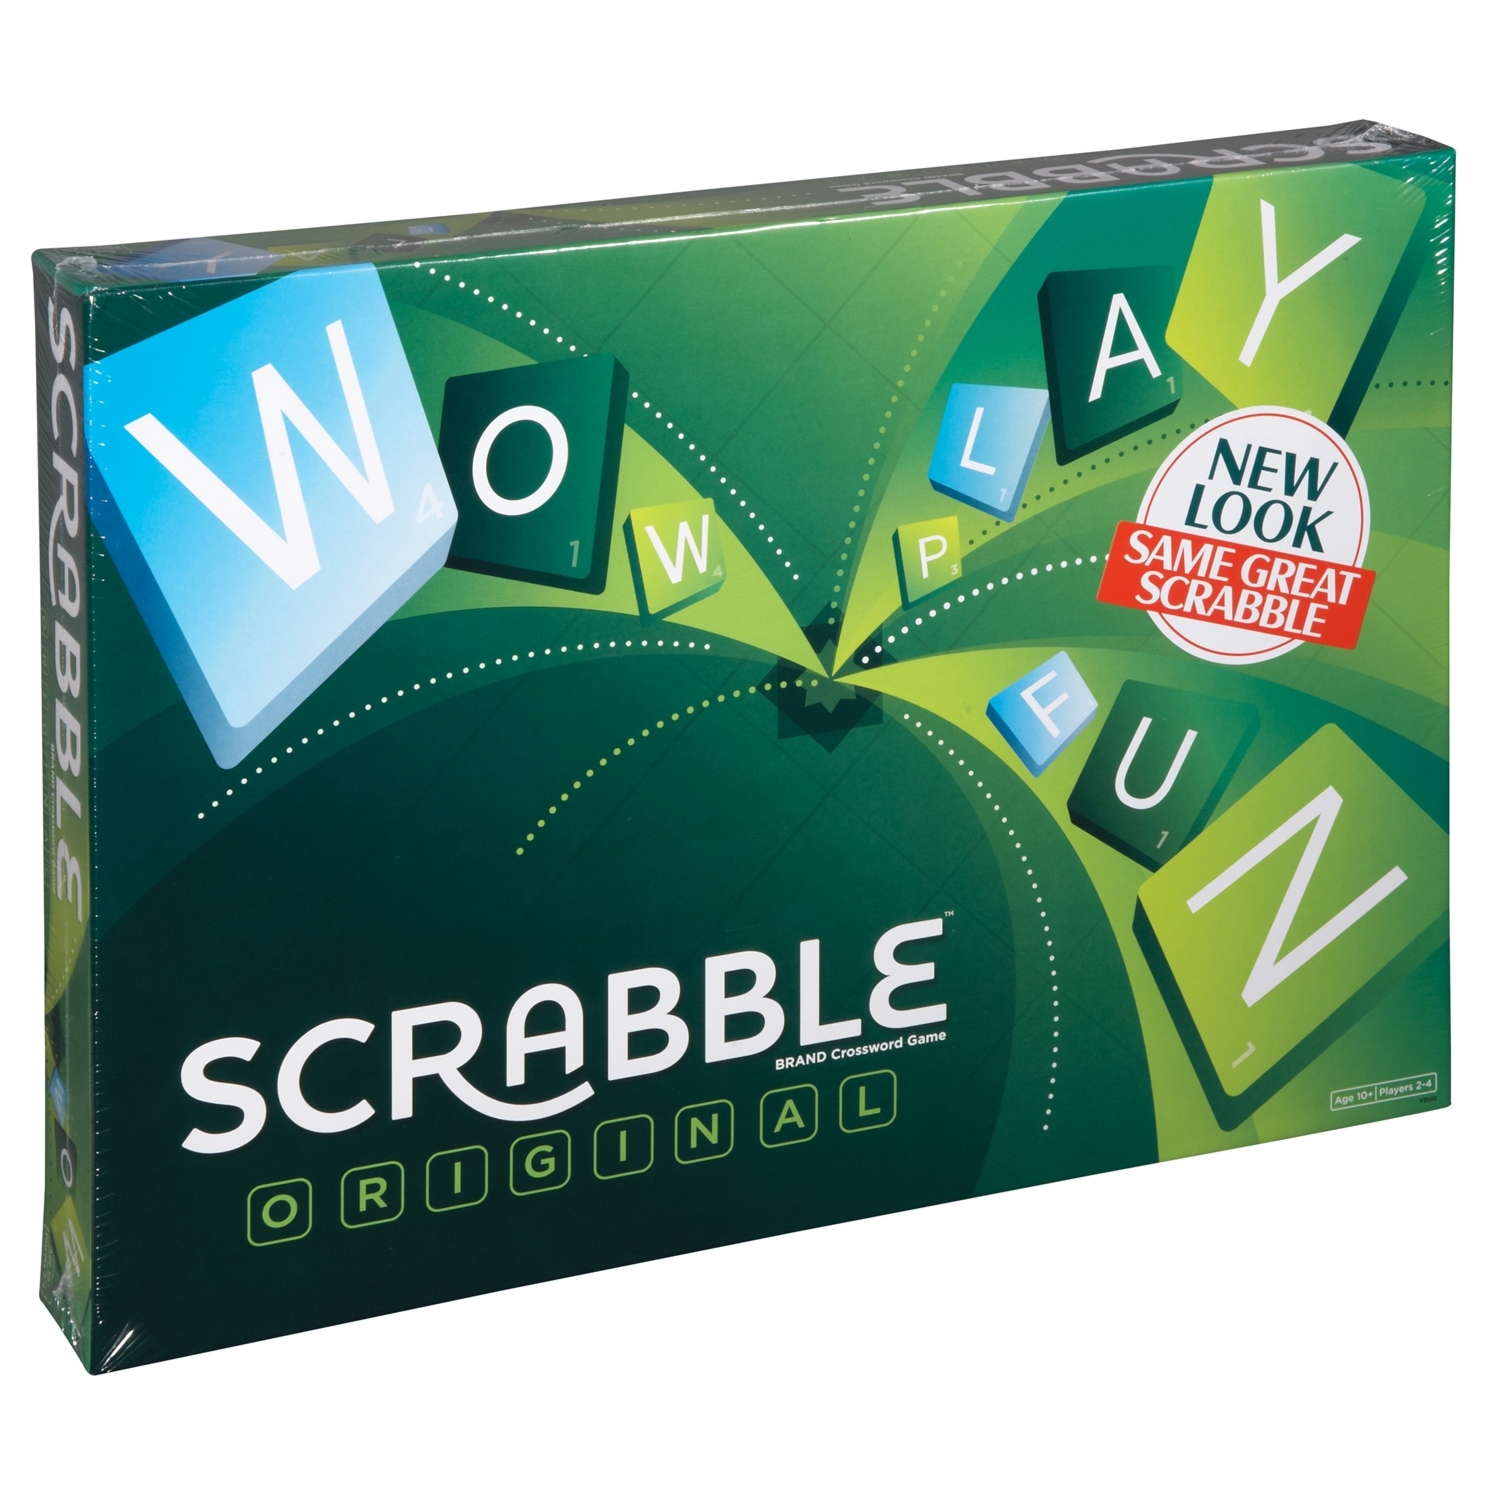 Mattle Scrabble Original Board Game Image 4